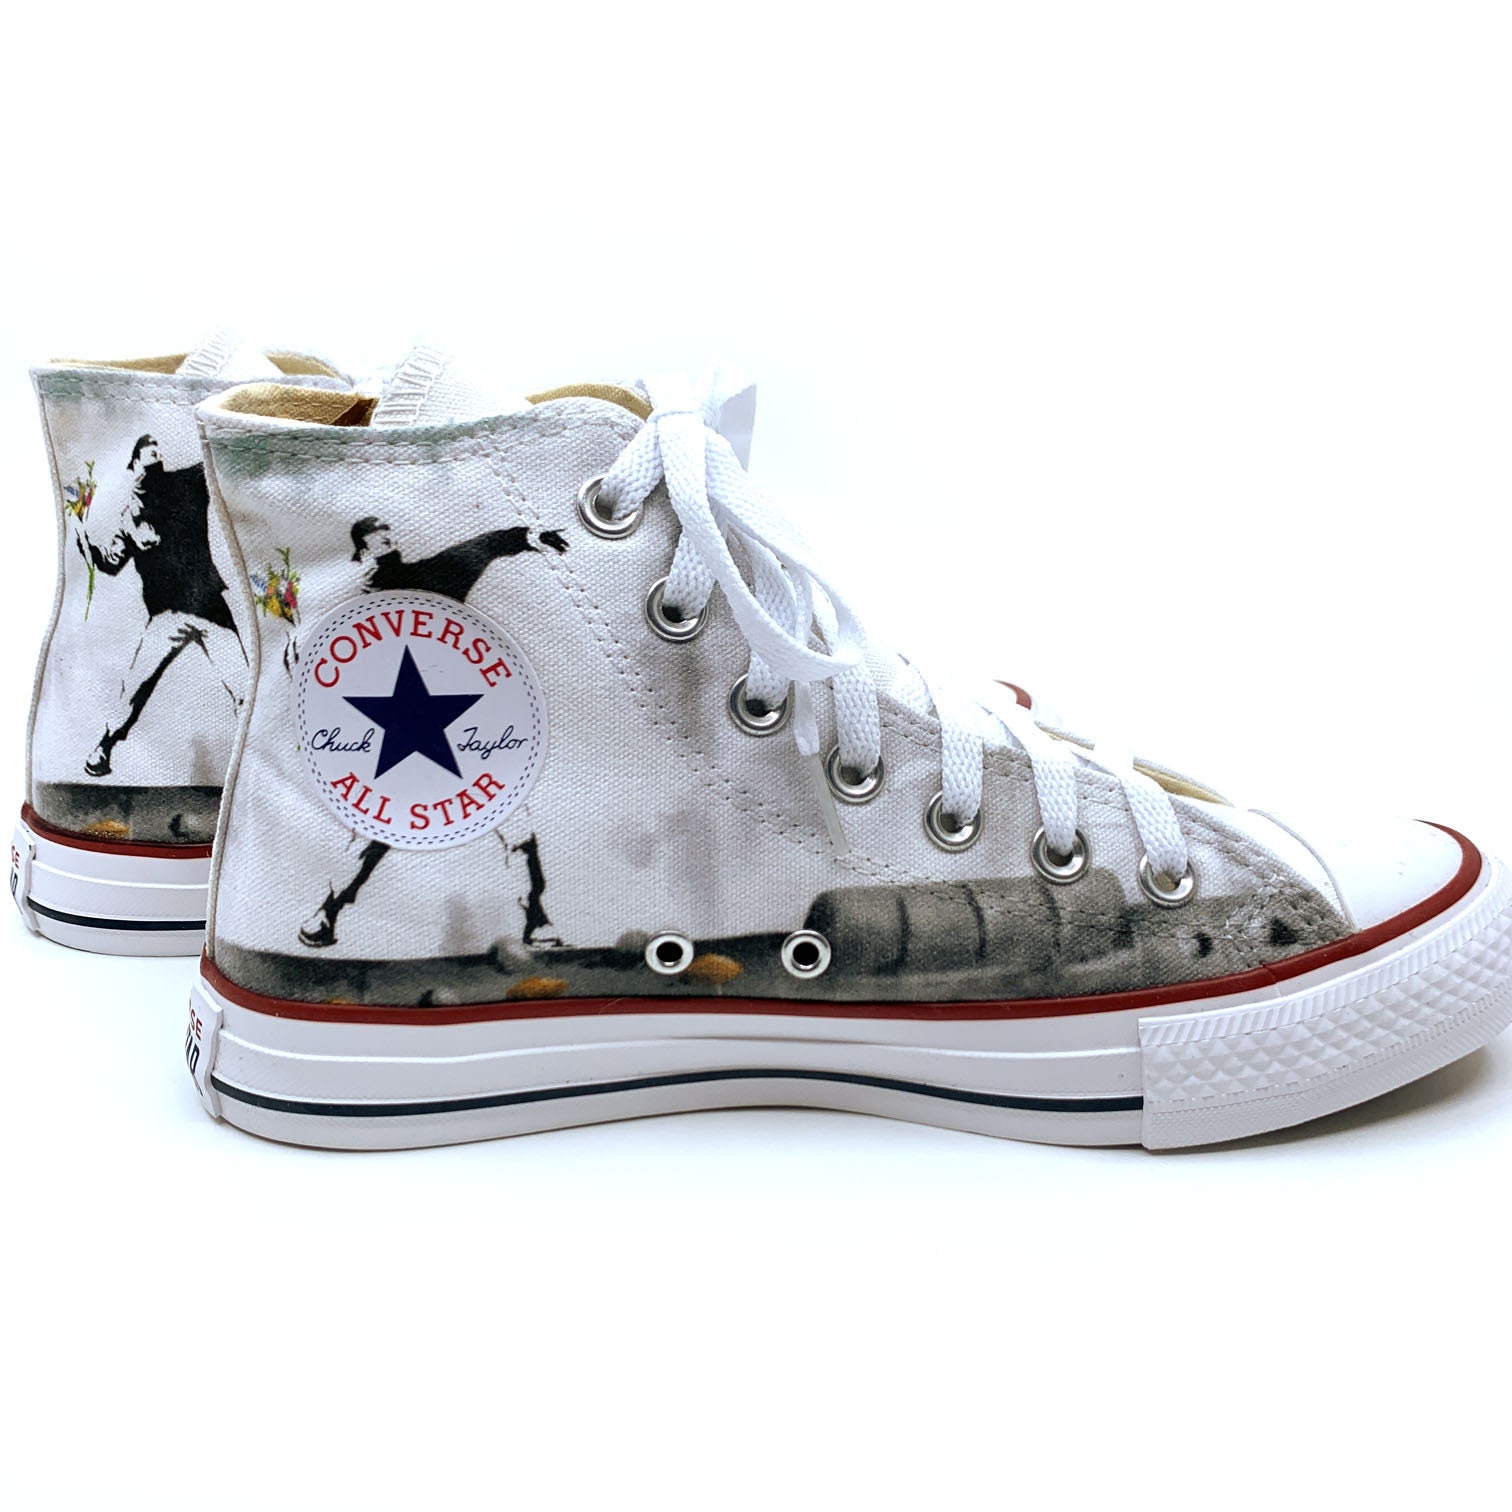 Peregrino sonrojo Historiador Banksy Art Custom Hand Made Hi Top Converse Shoes There is - Etsy